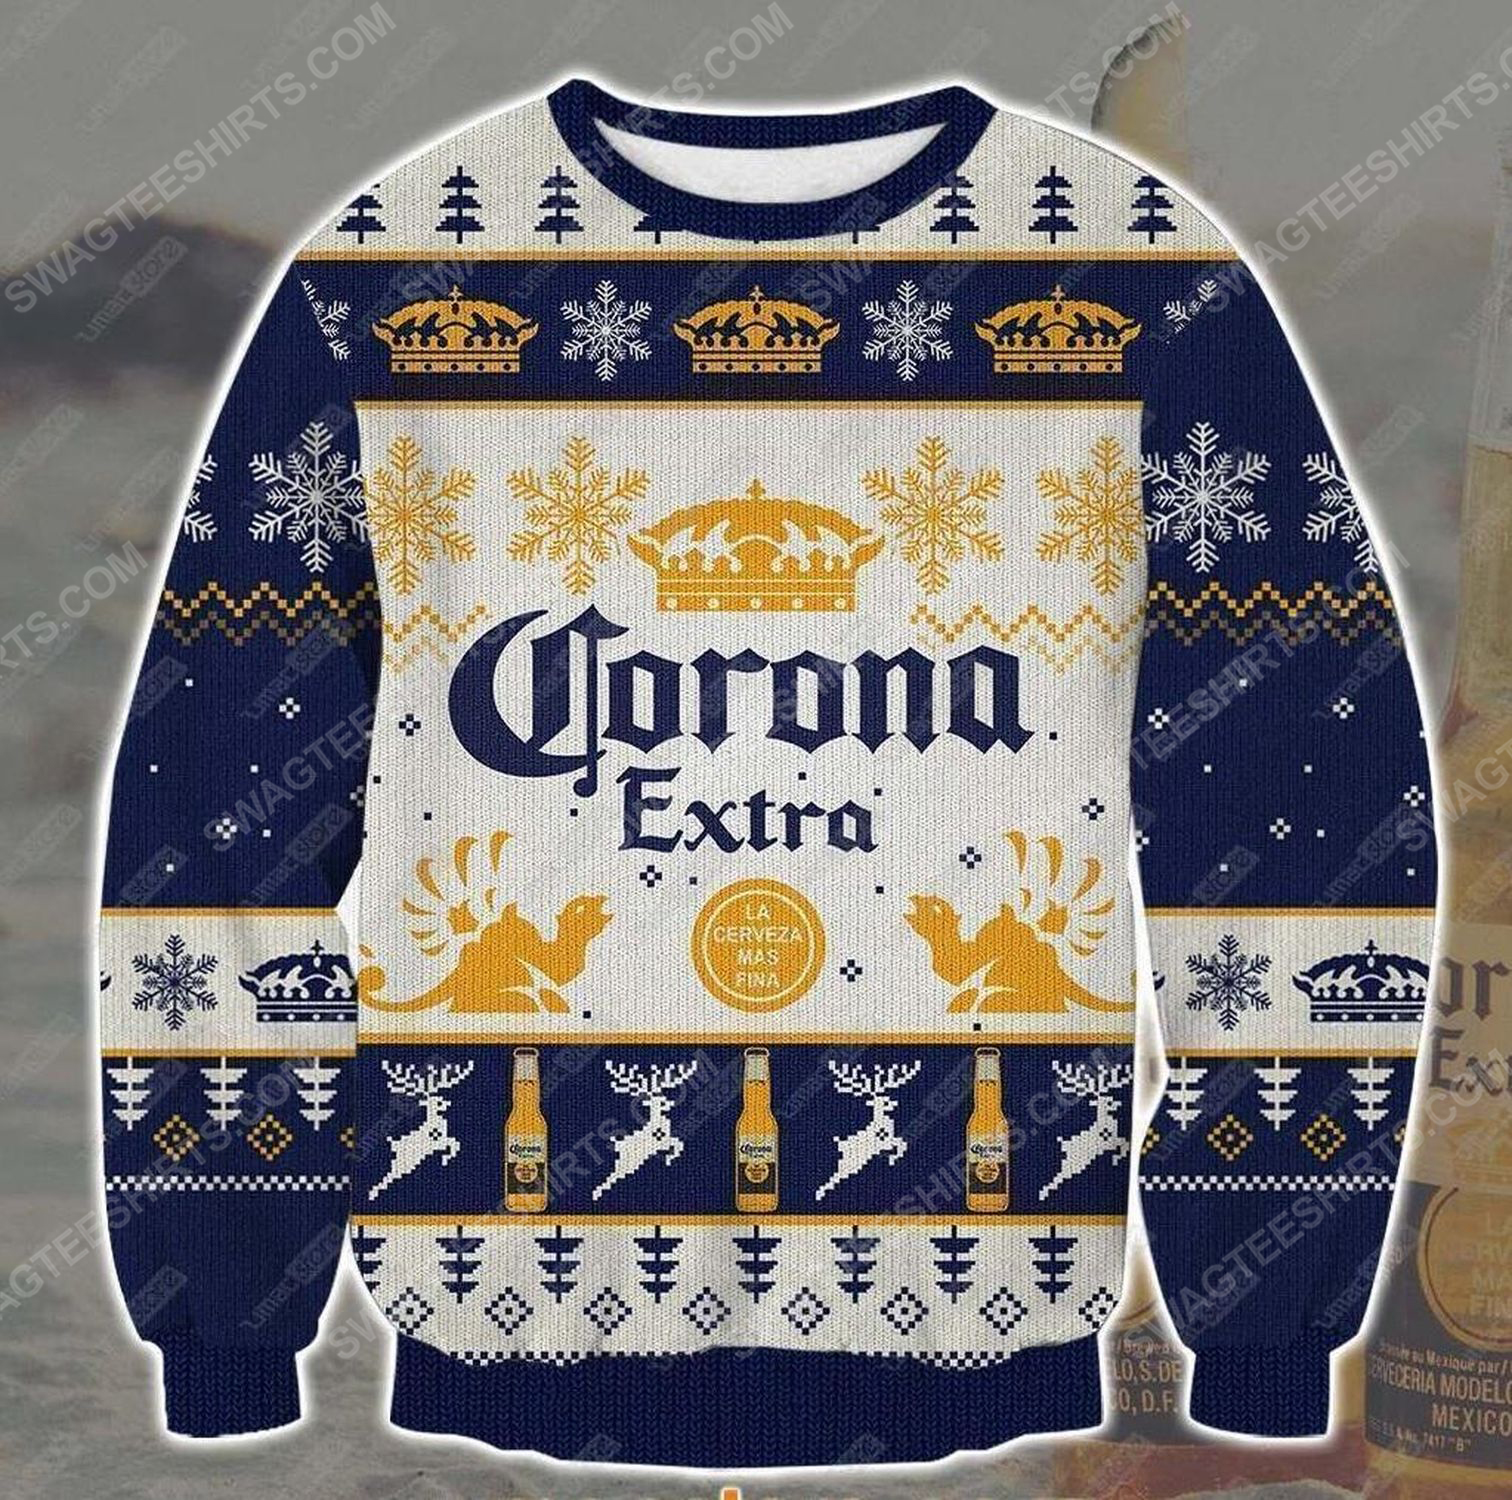 Corona extra beer ugly christmas sweater - Copy (2)